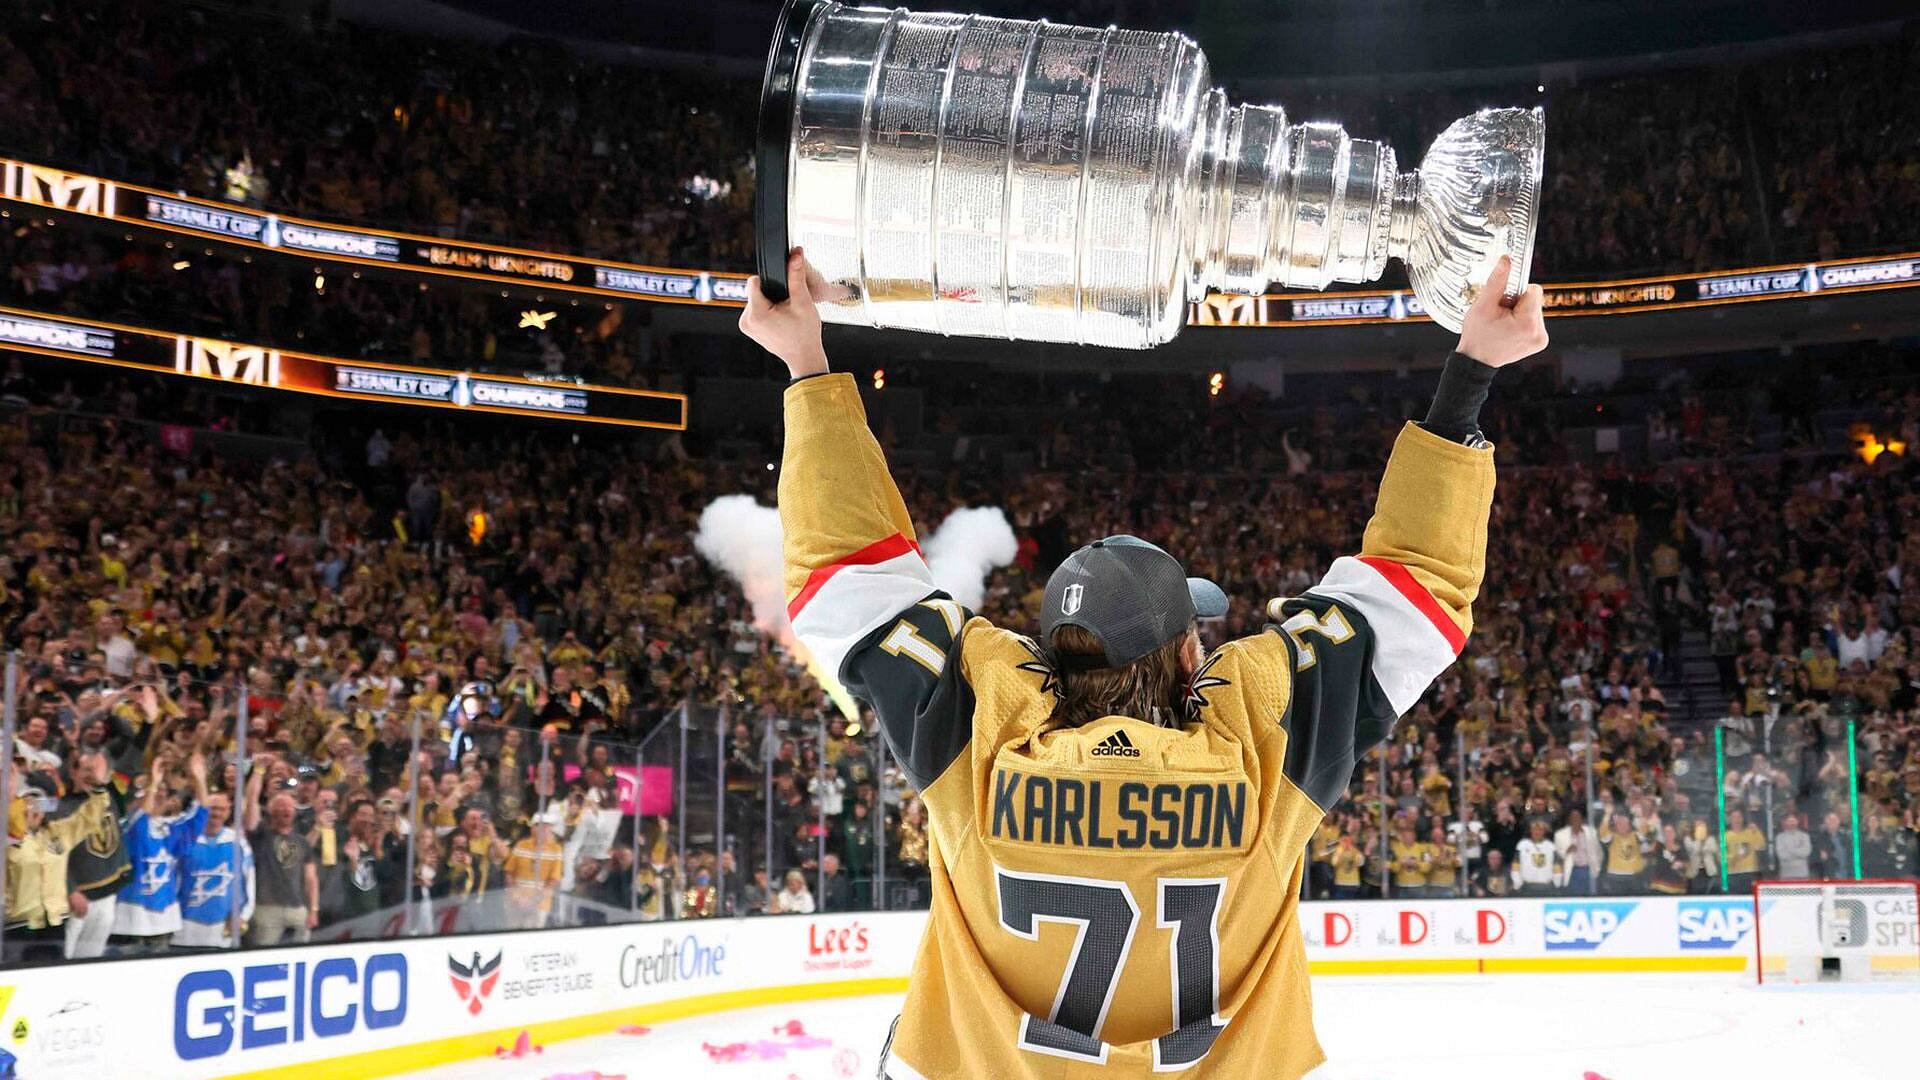 Vegas Golden Knights: 2023 Stanley Cup Championship Film